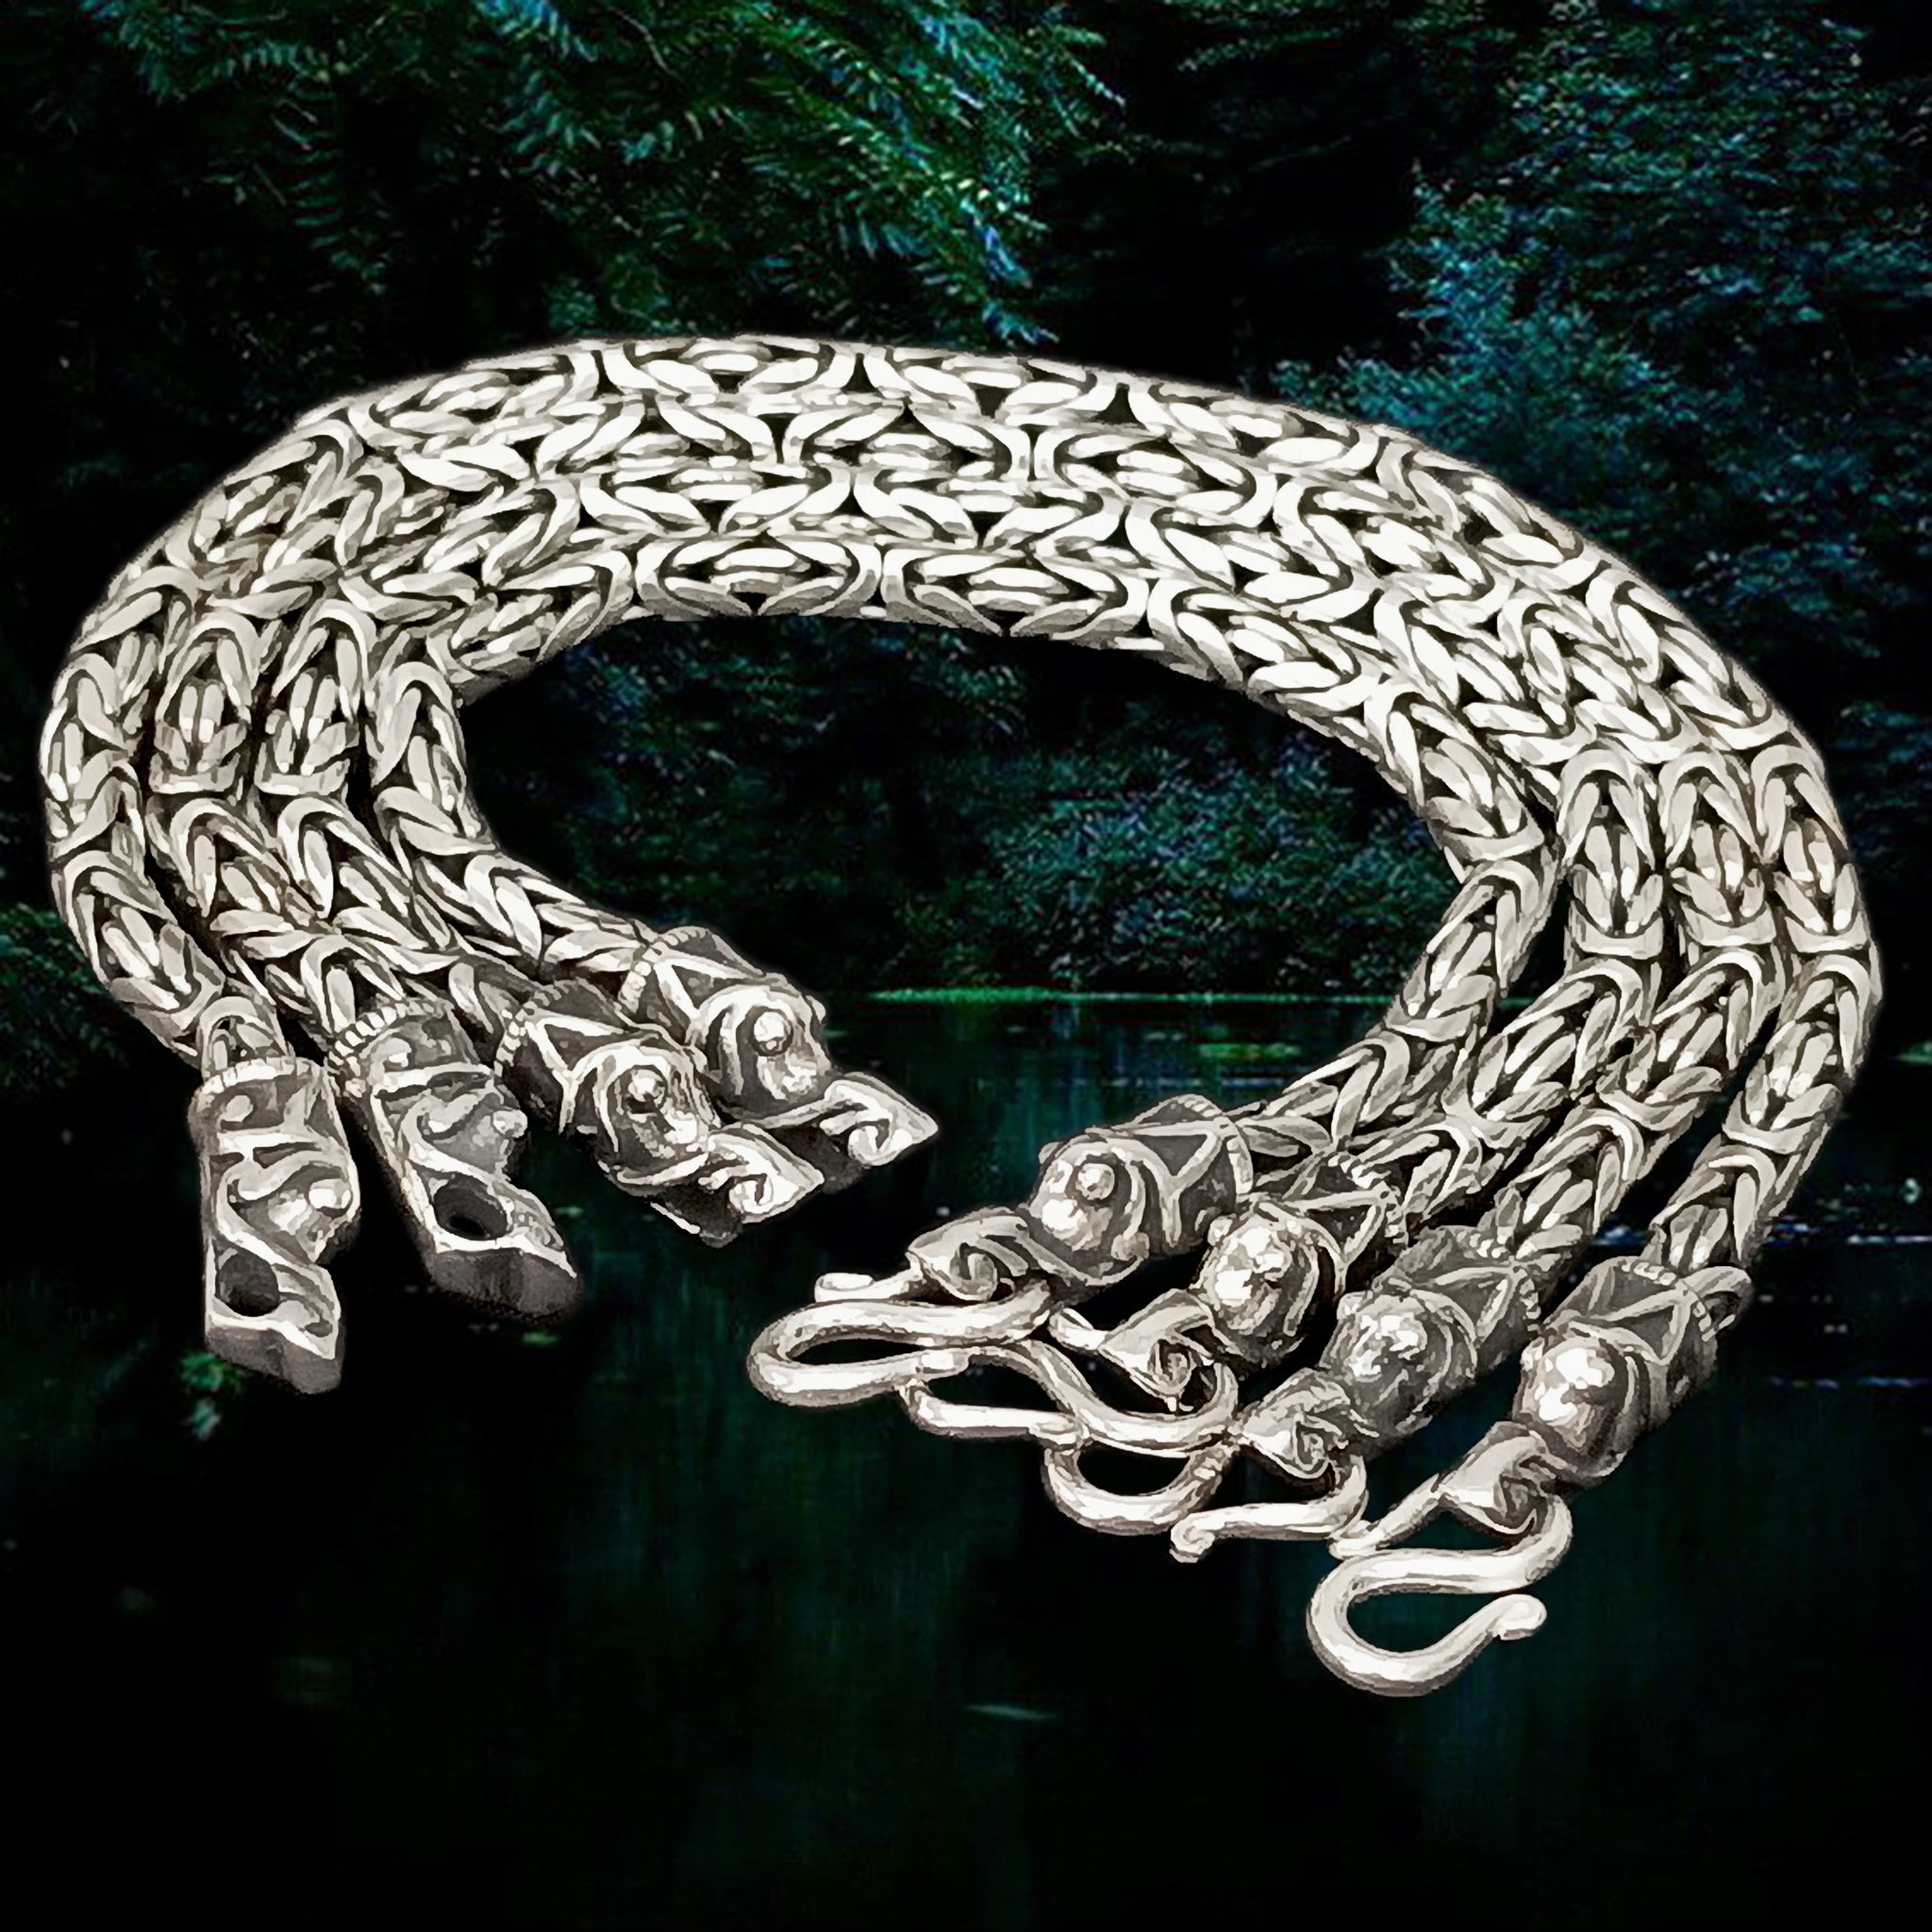 5mm Silver King Bracelets With Gotlandic Dragon Heads